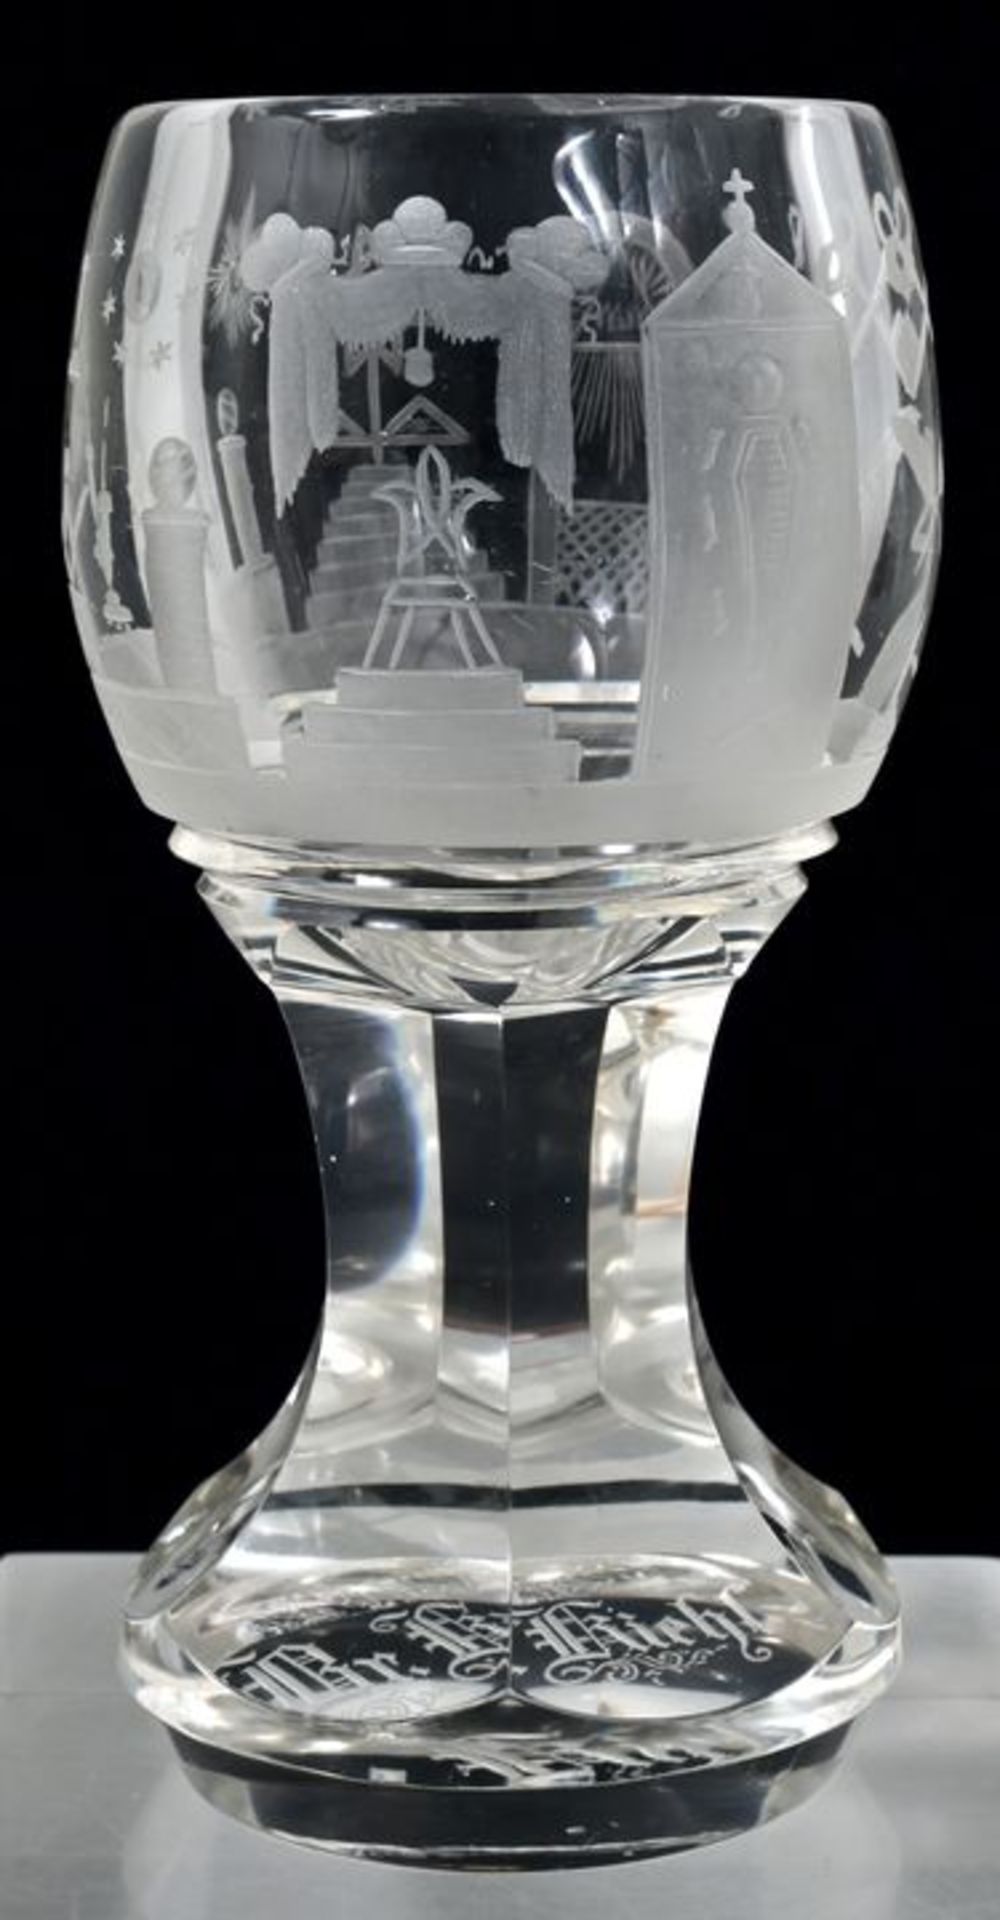 Logenglas, deutschsprachiger Raum, 2. H. 19. Jh./ um 1900Farbloses Glas/ Kristall, facettiert